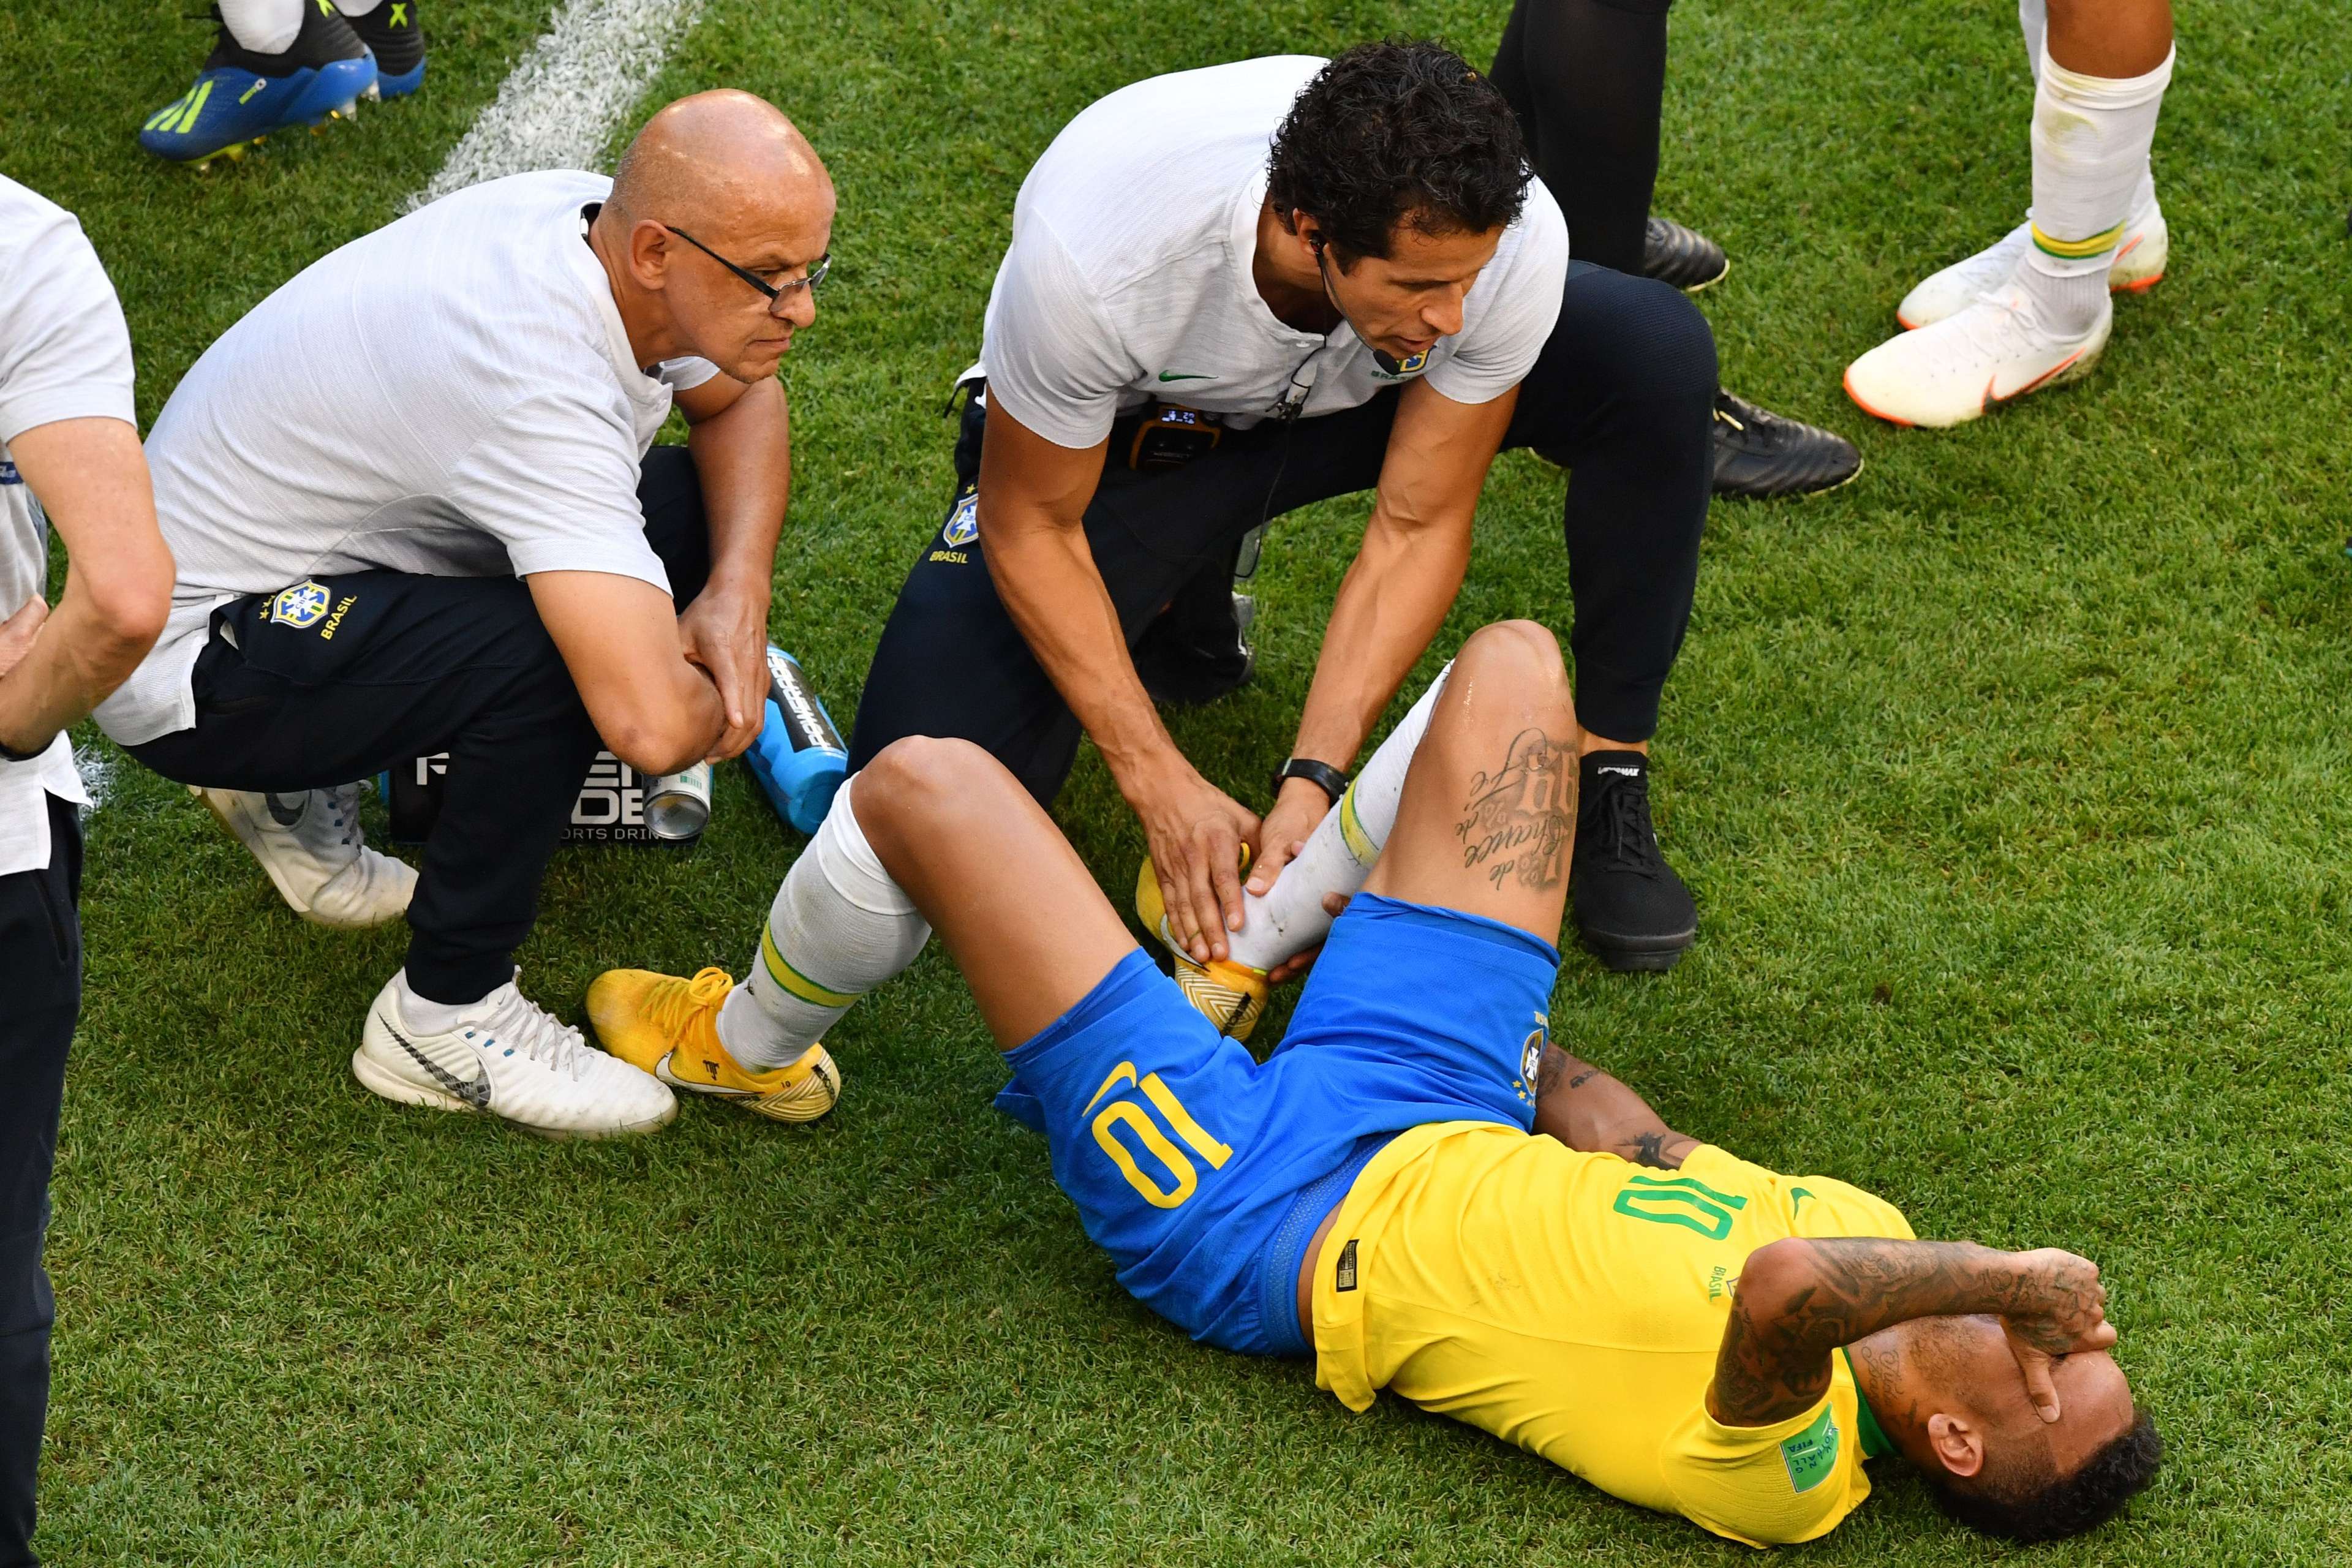 Neymar Brazil World Cup